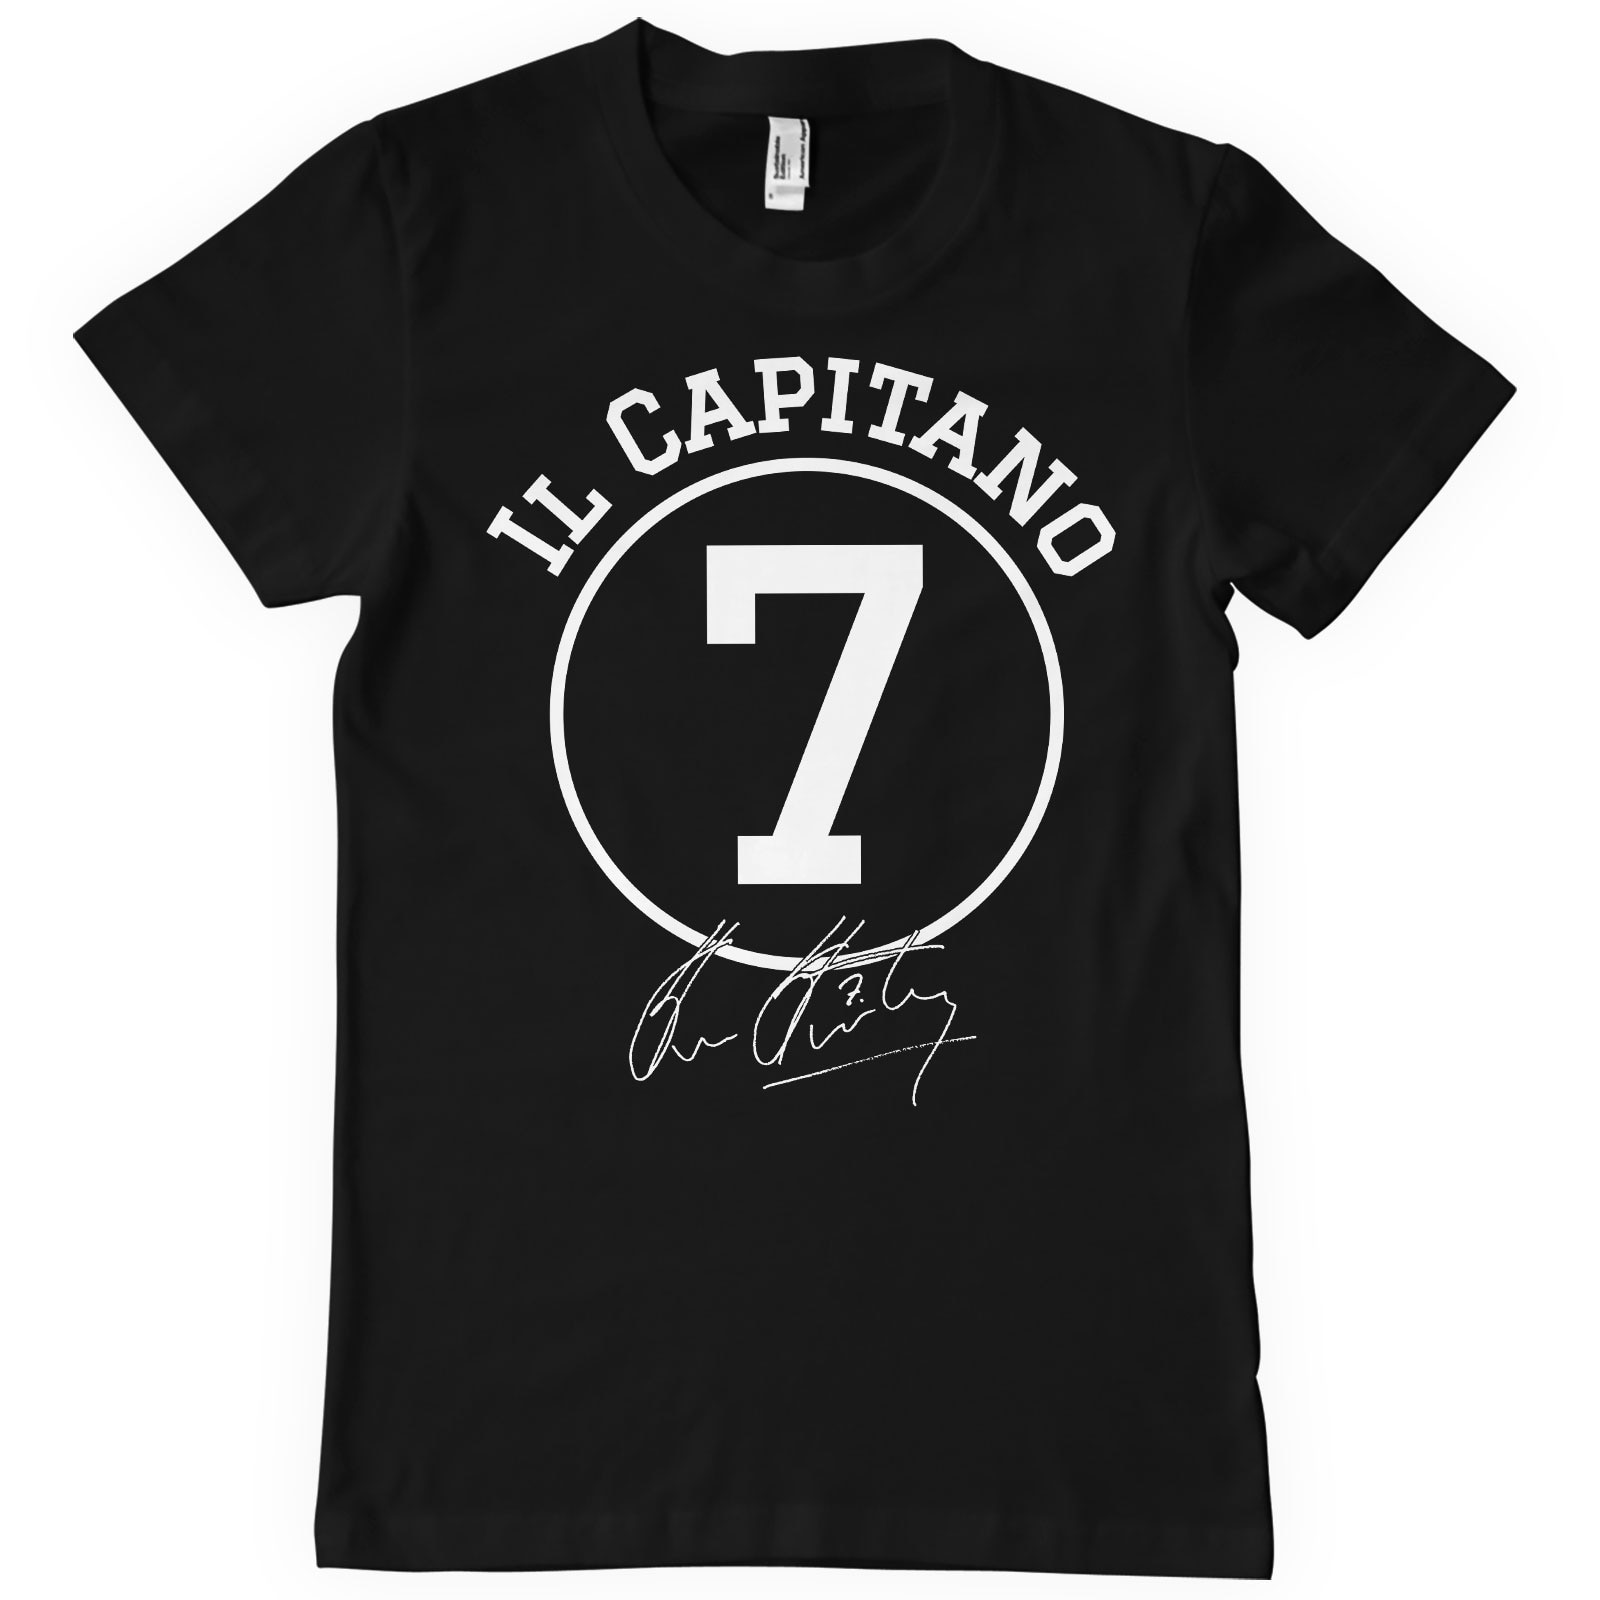 Il Capitano 7 T-Shirt